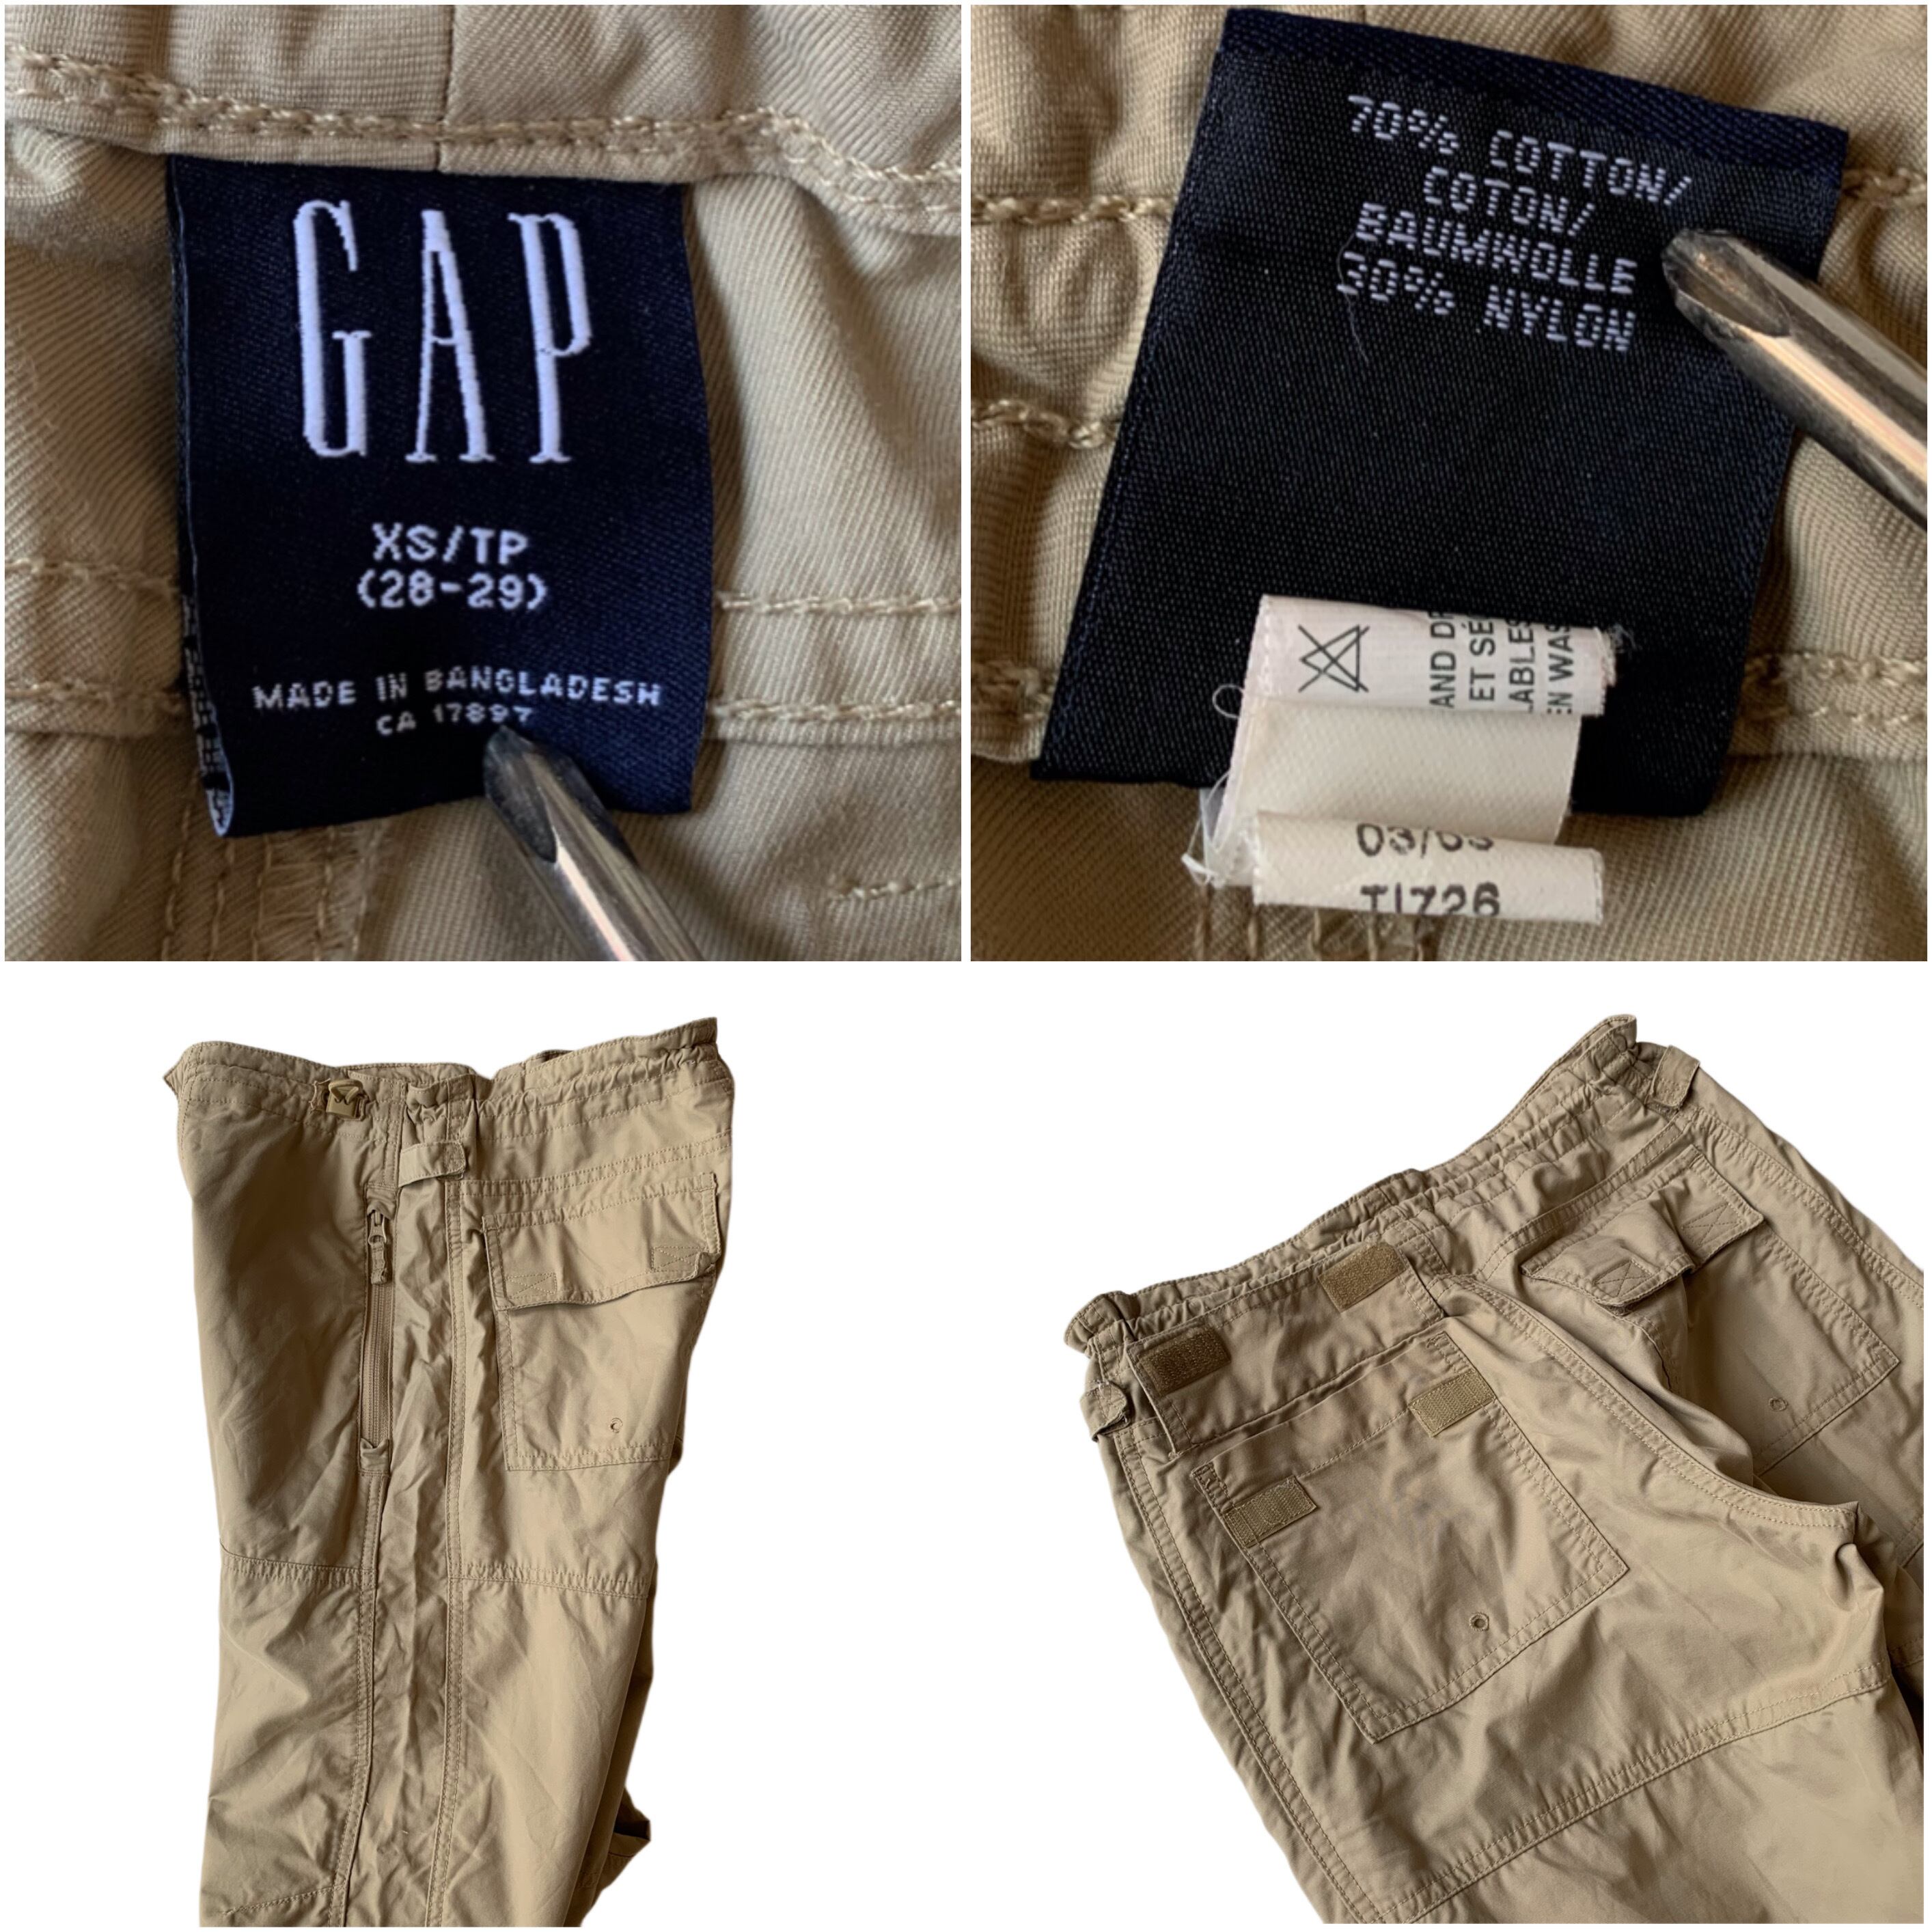 Old GAP NYLON cargo pants